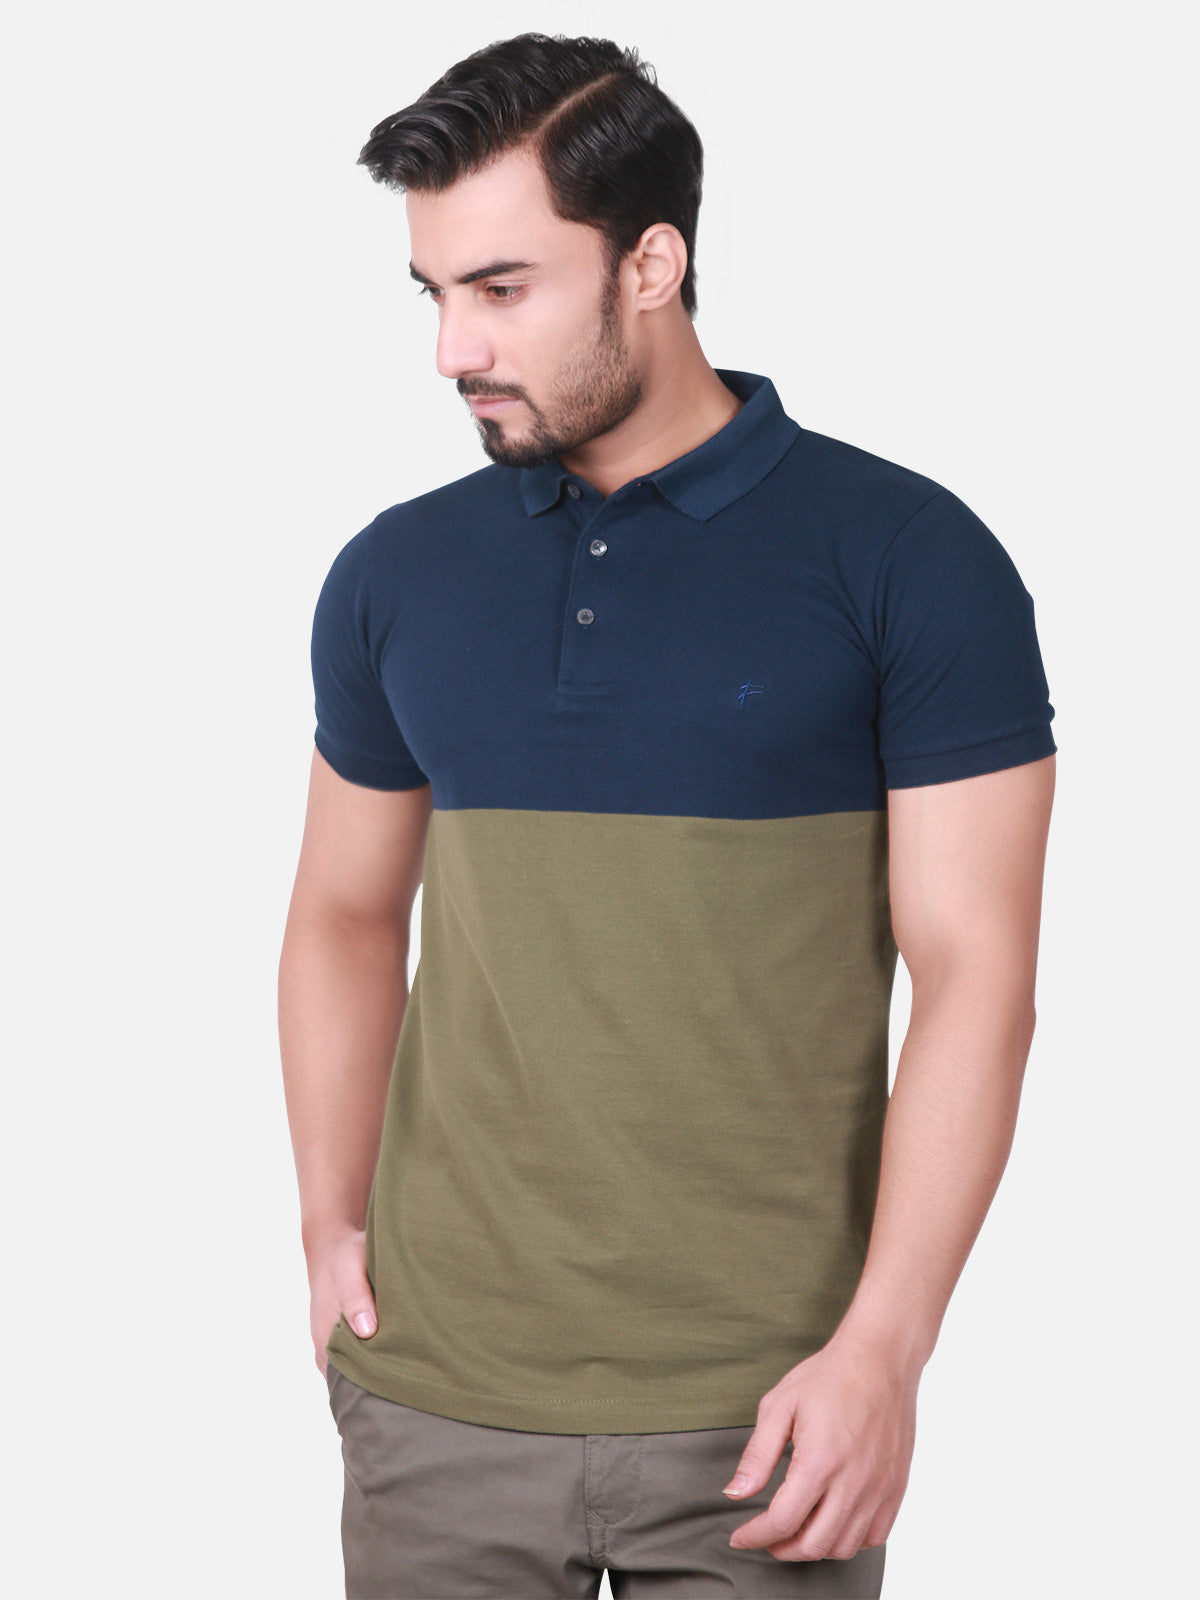 Men's Navy Blue Polo Shirt - FMTTS17-17200